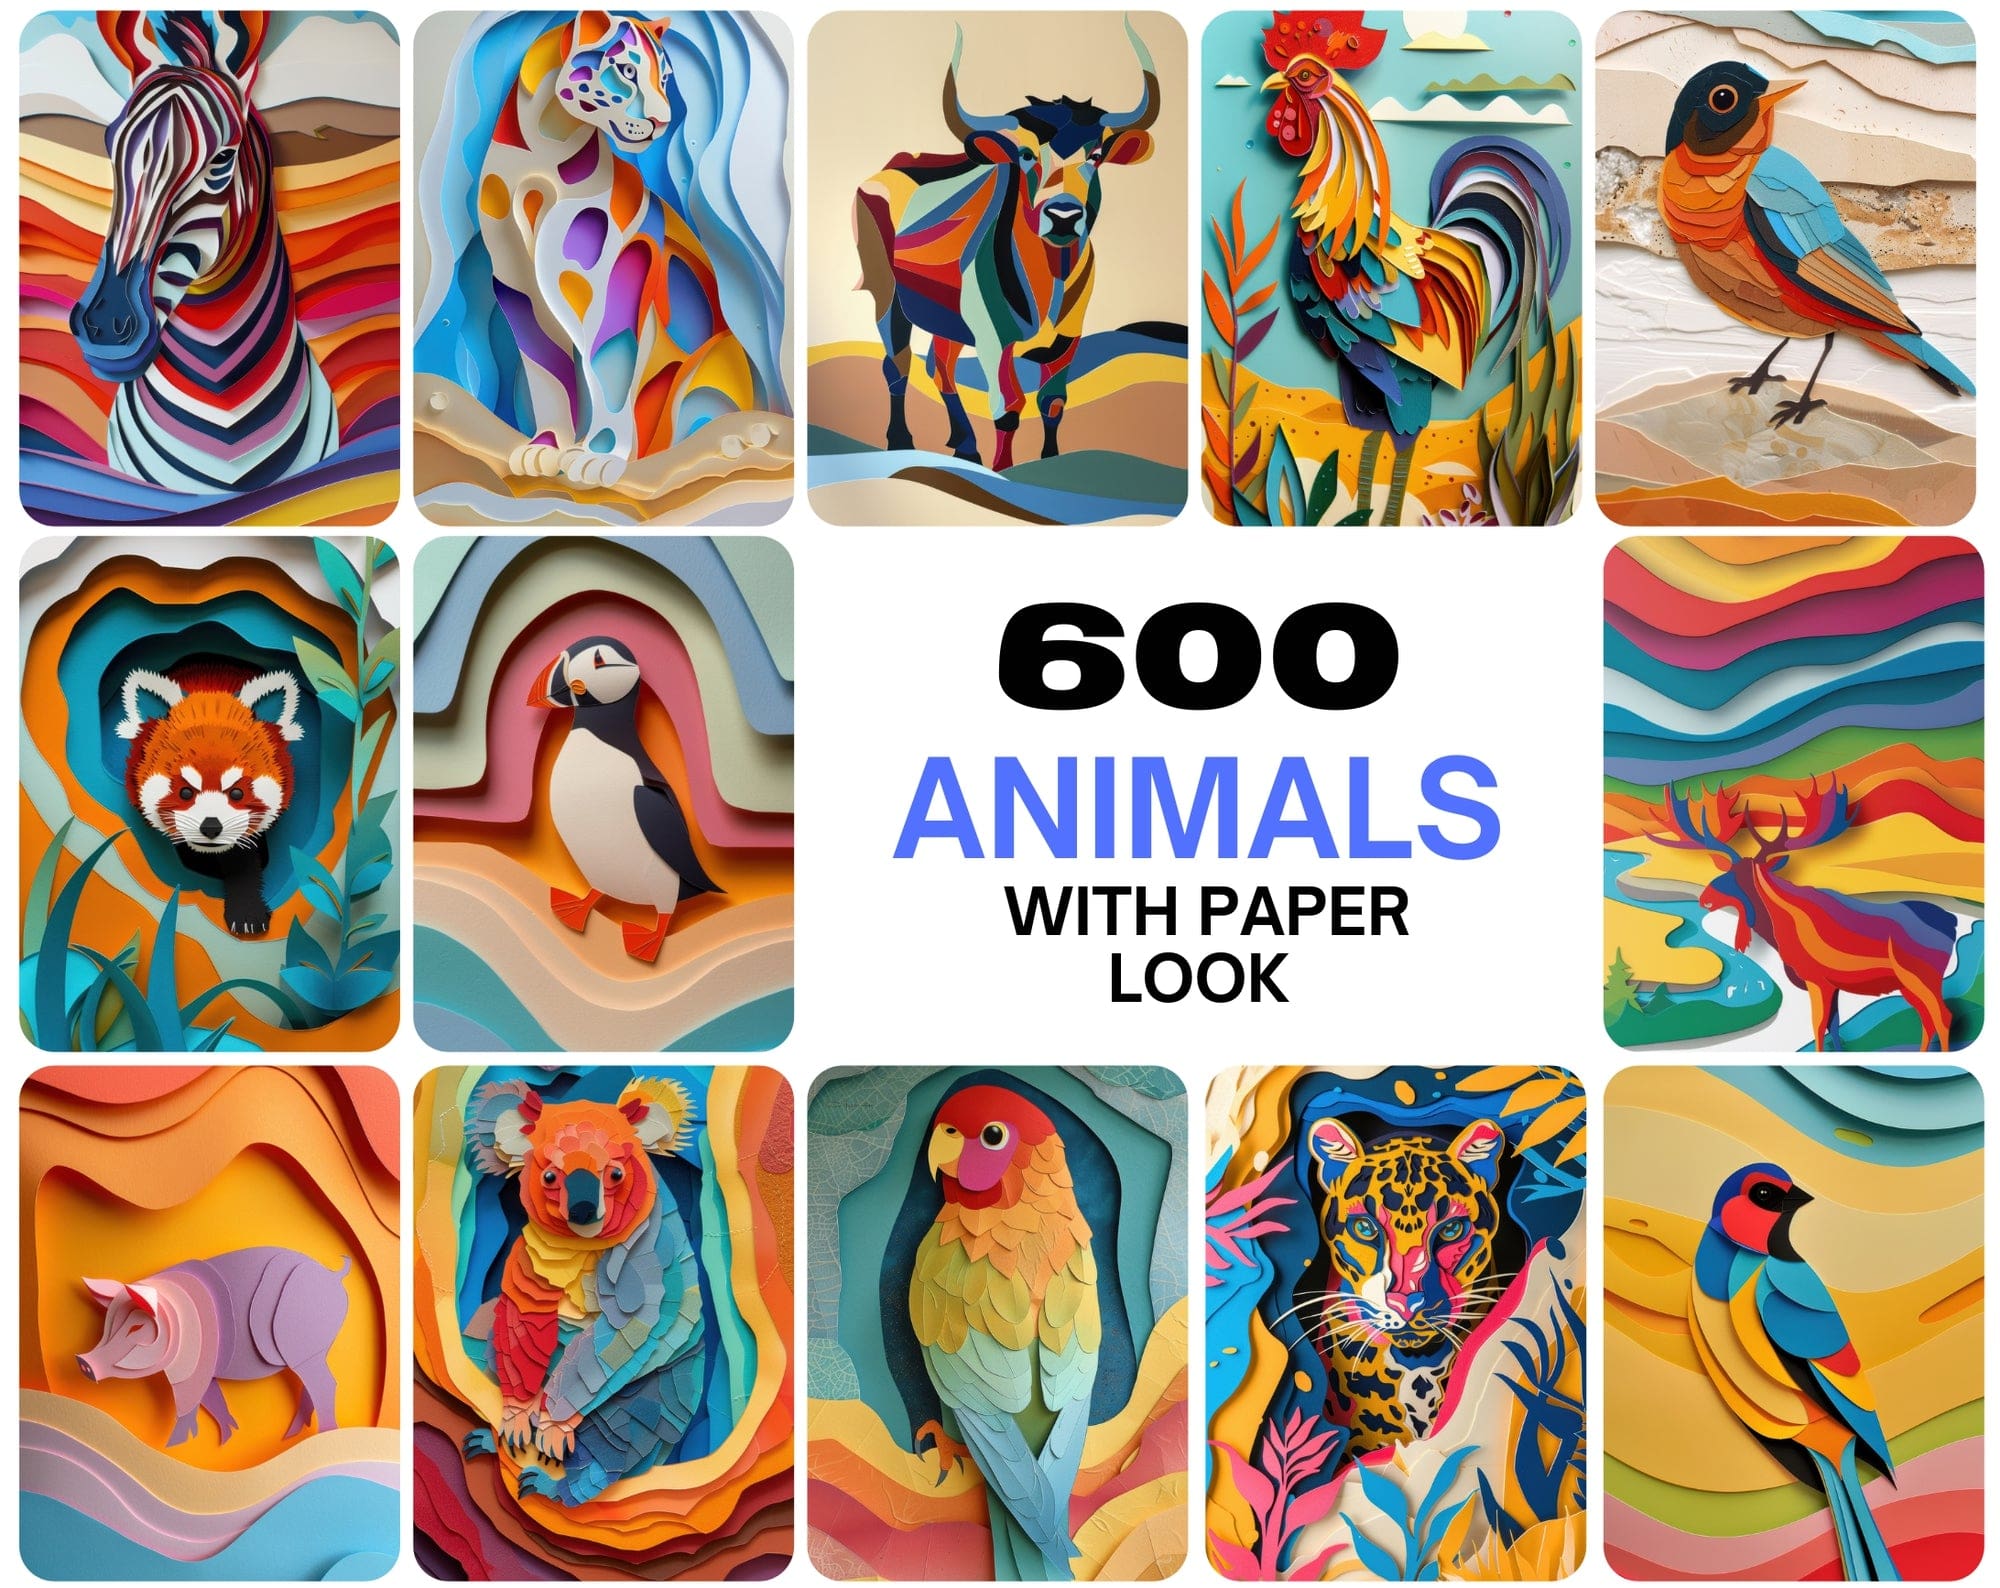 600 Colorful Animal Images with Paper Cut Look Digital Download Sumobundle